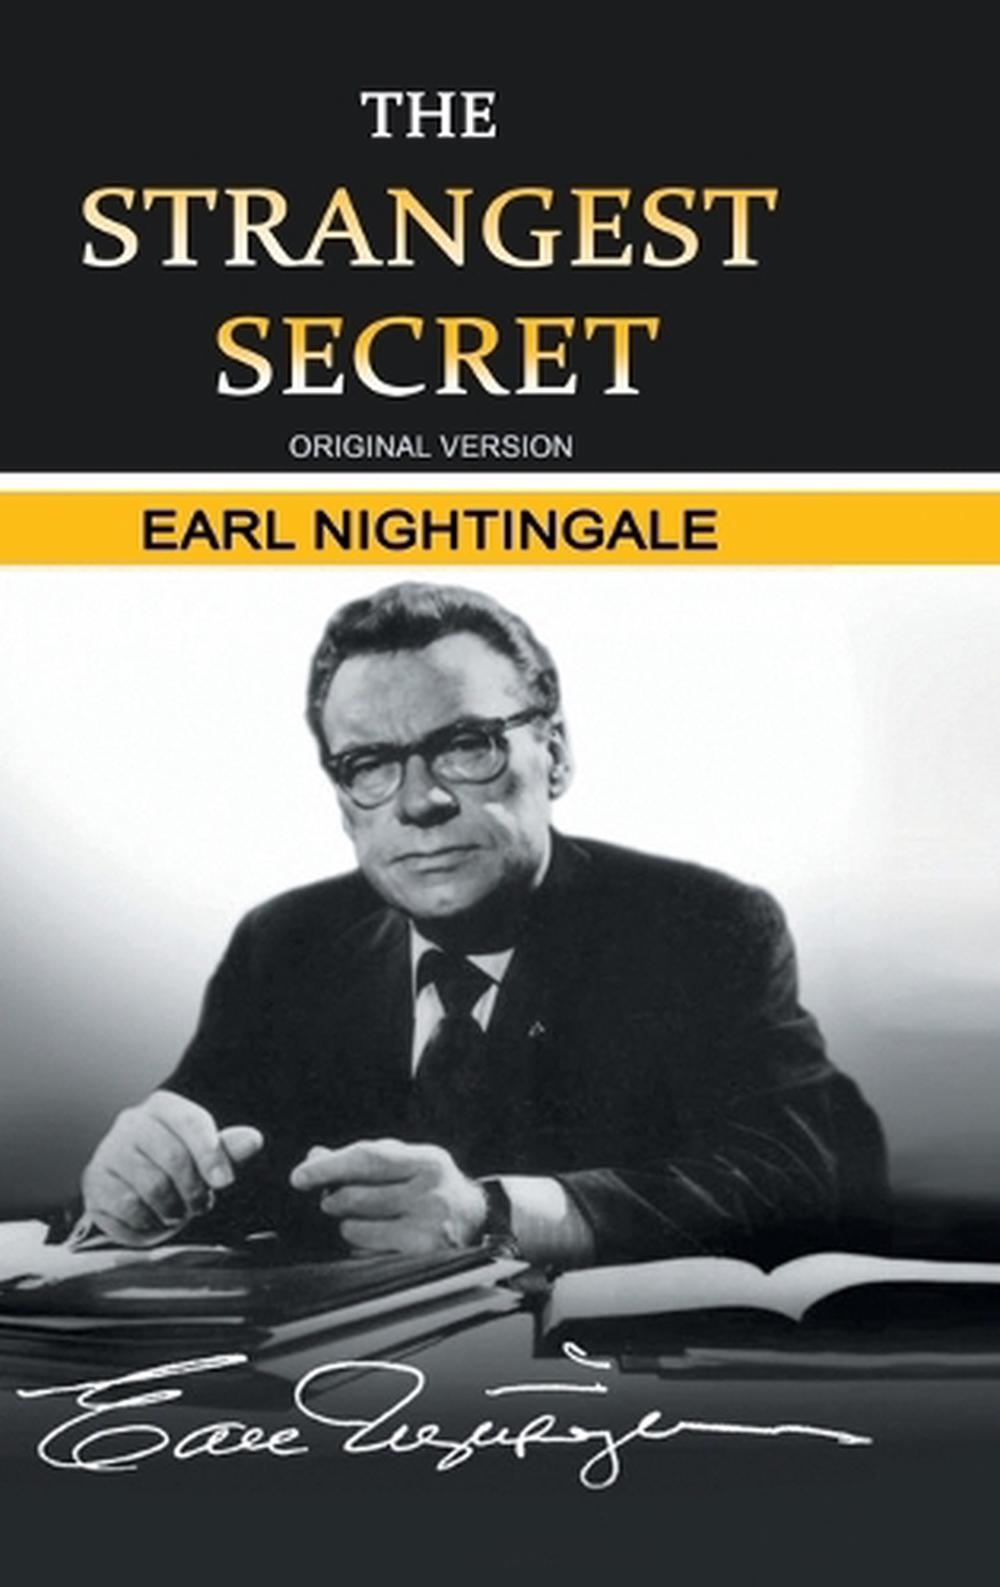 download earl nightingale